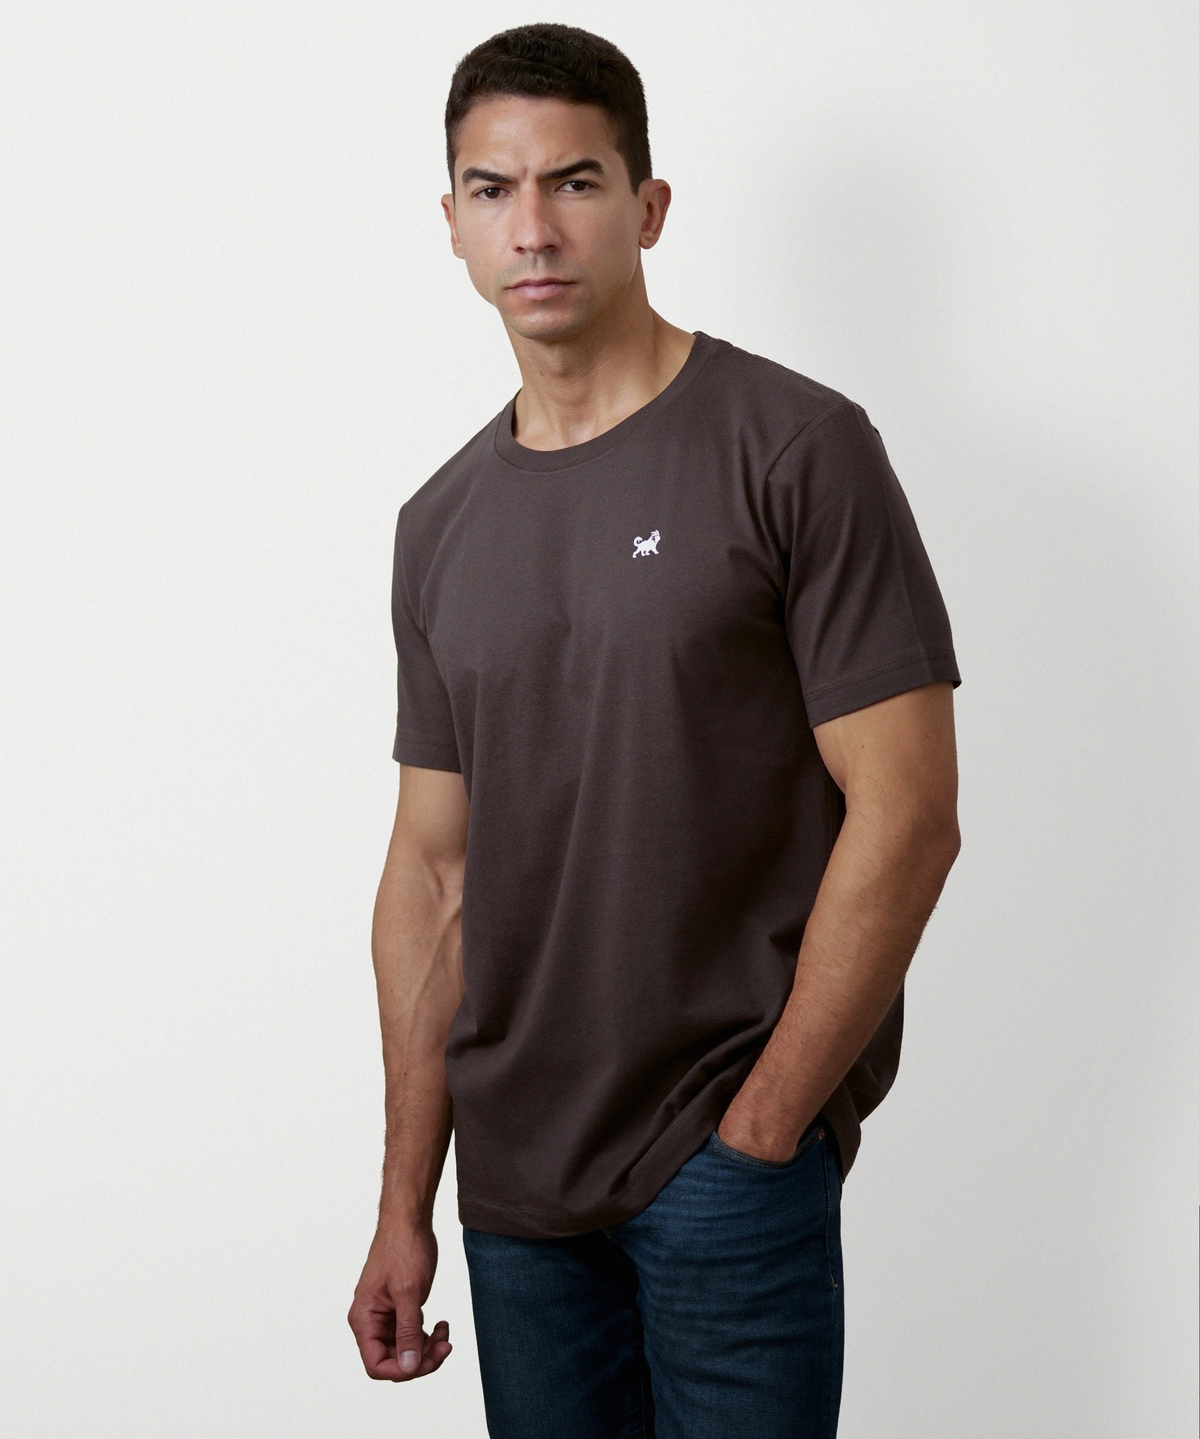 Signature Short Sleeve T-Shirt for Men (Brown)